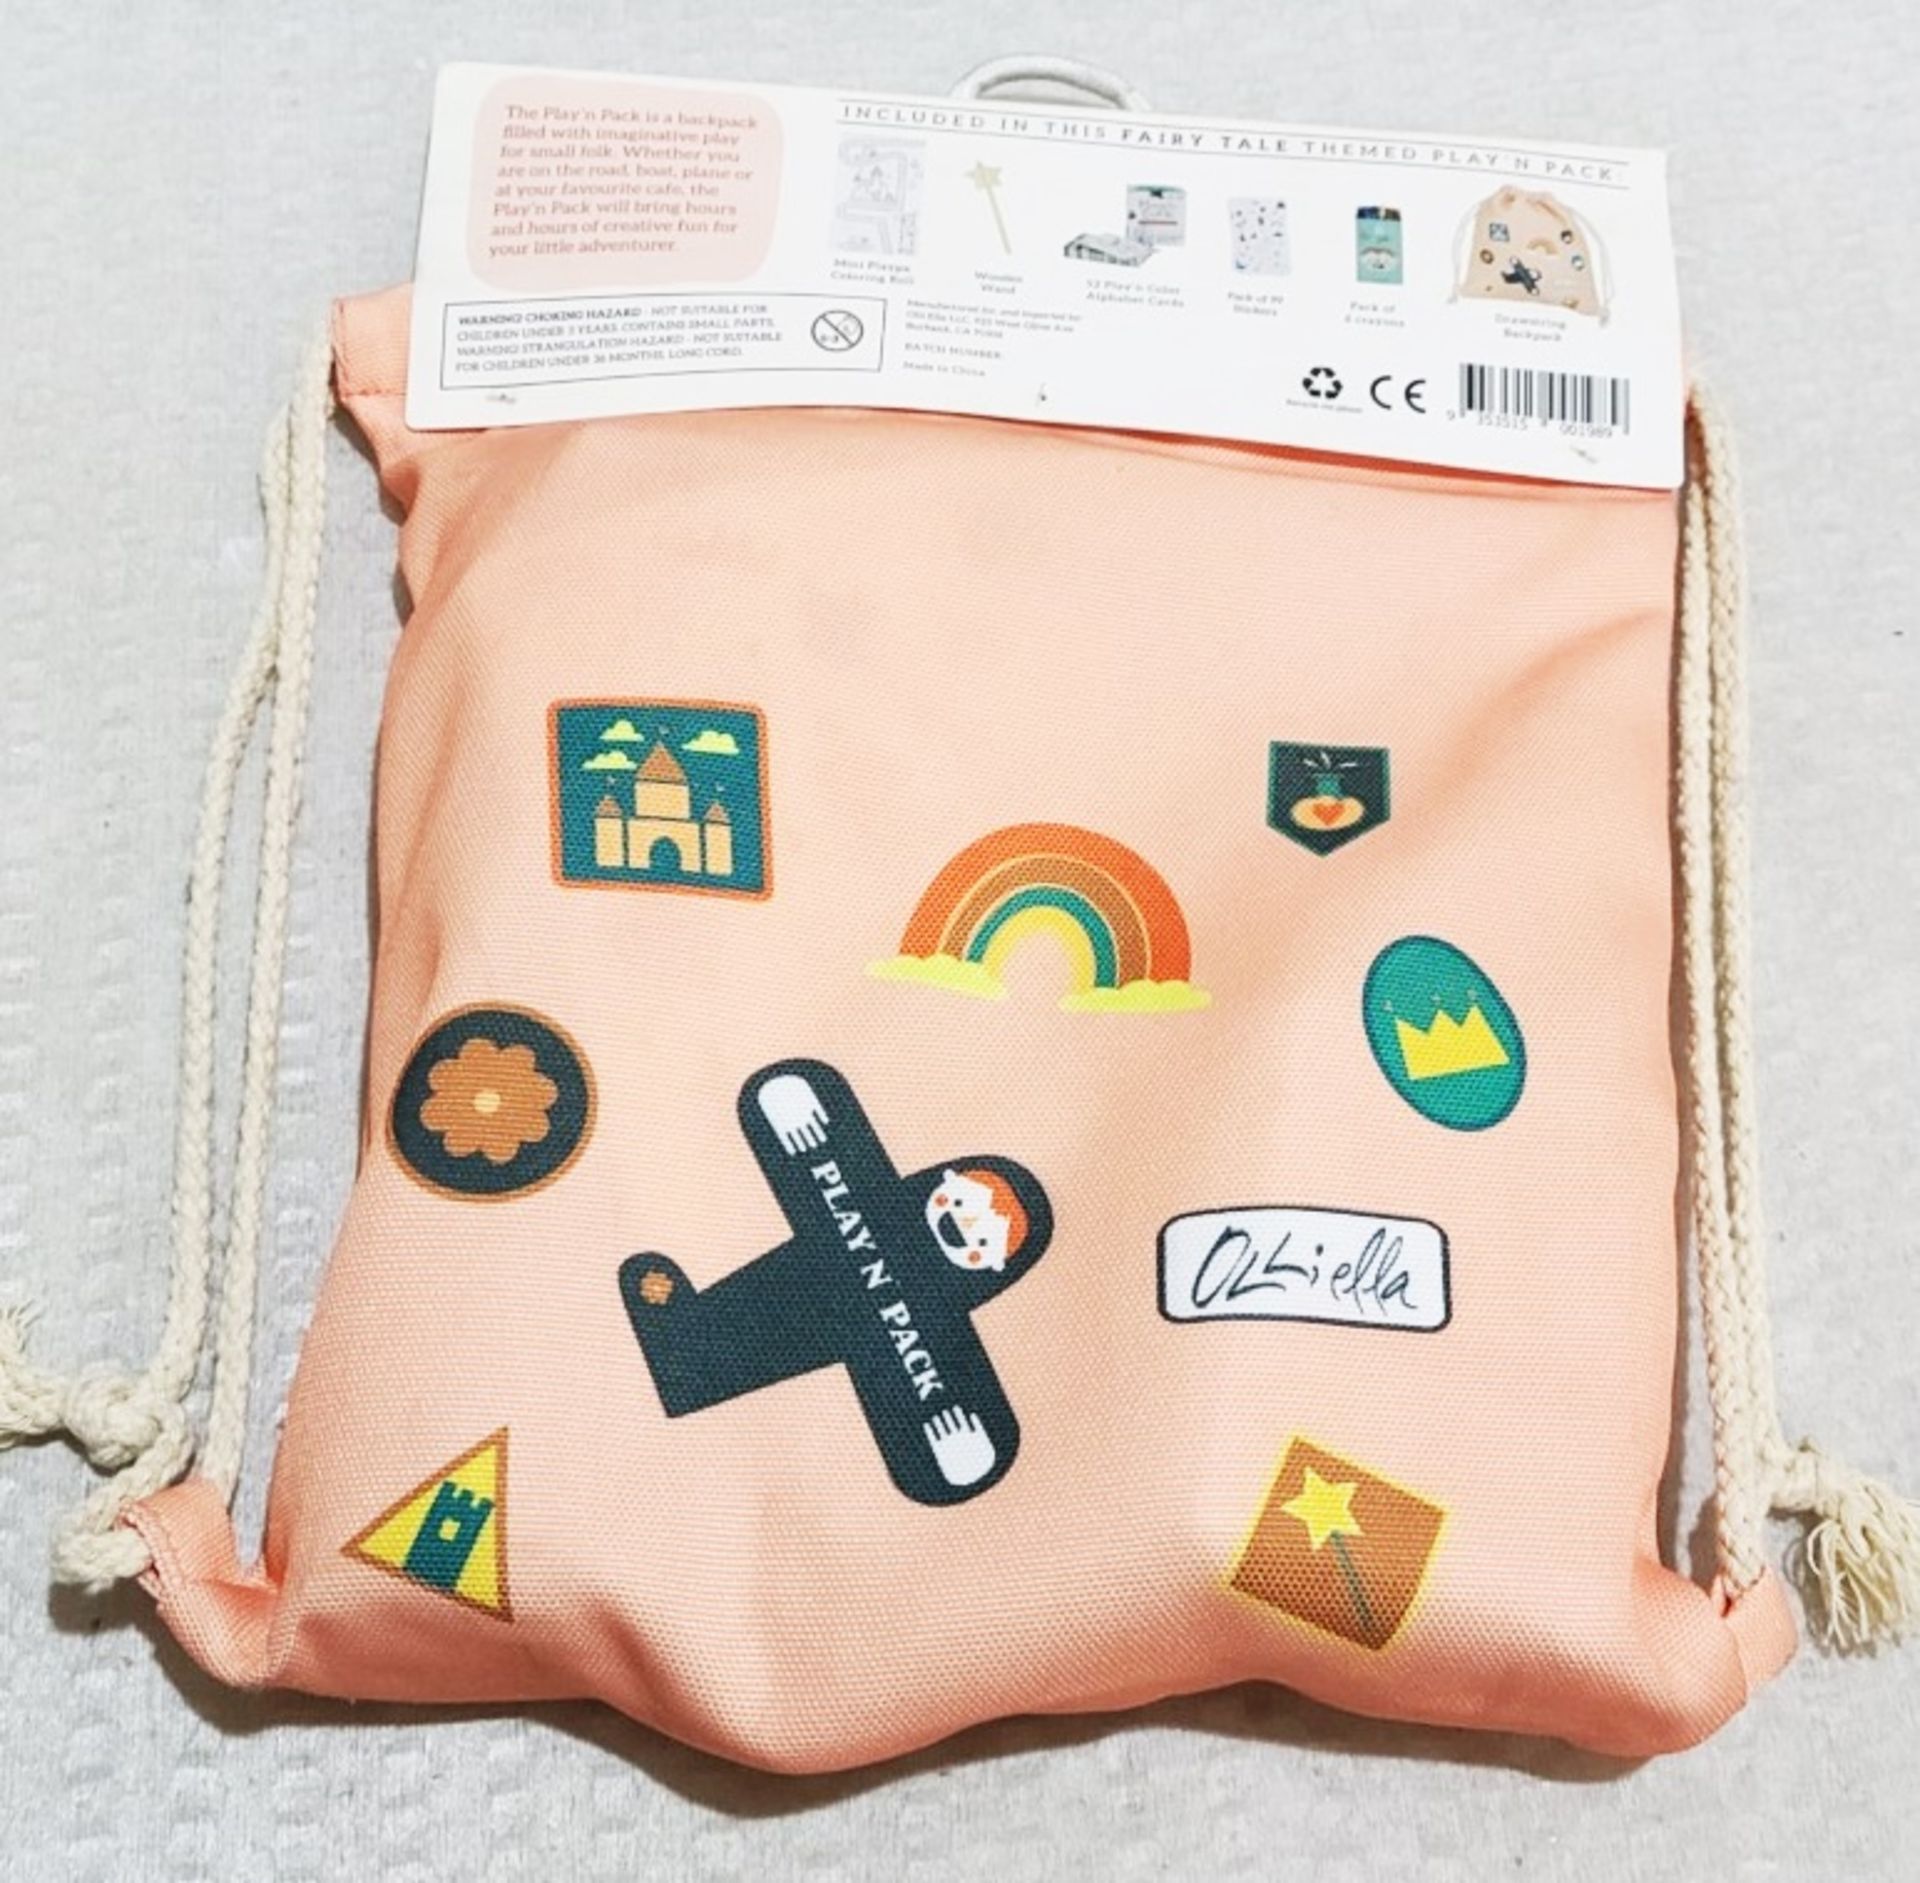 1 x OLLI ELLA Fairy Tale Play'N Pack Backpack - Unused Boxed Stock - Image 4 of 5